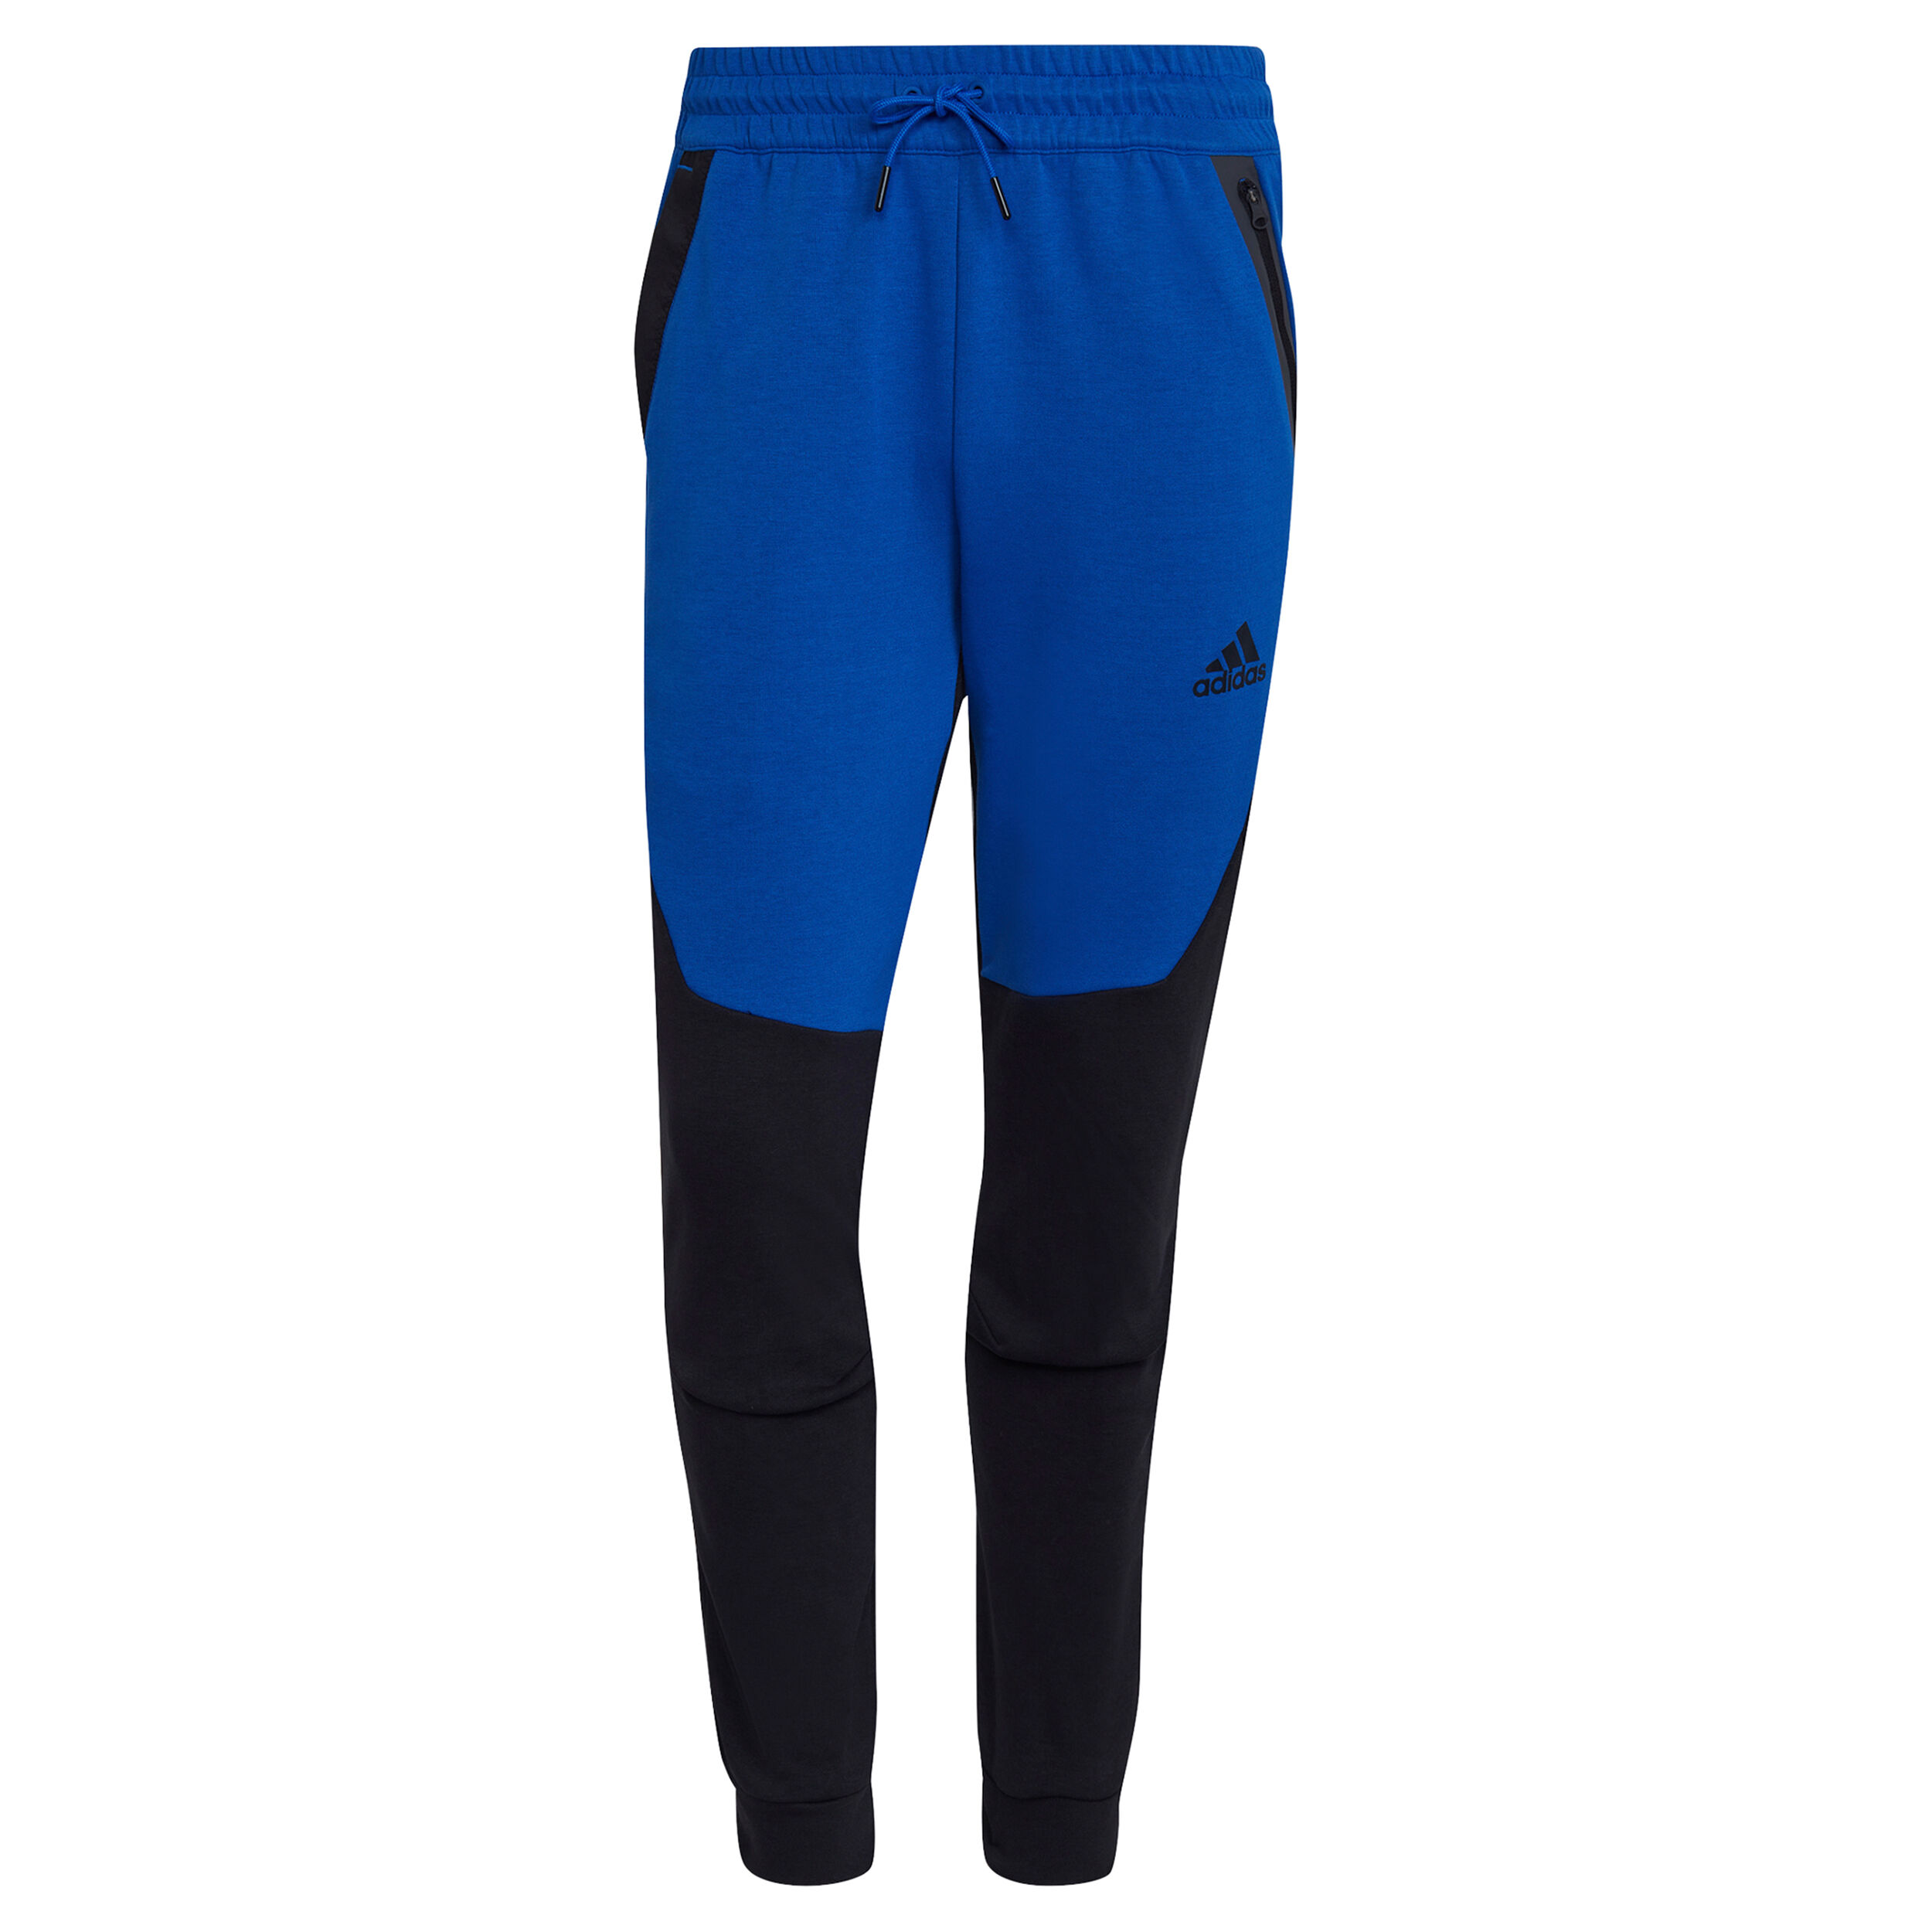 ADIDAS Men's Sportswear Designed for Gameday Pants NWT Royal Blue/Black  SIZE: XL | eBay